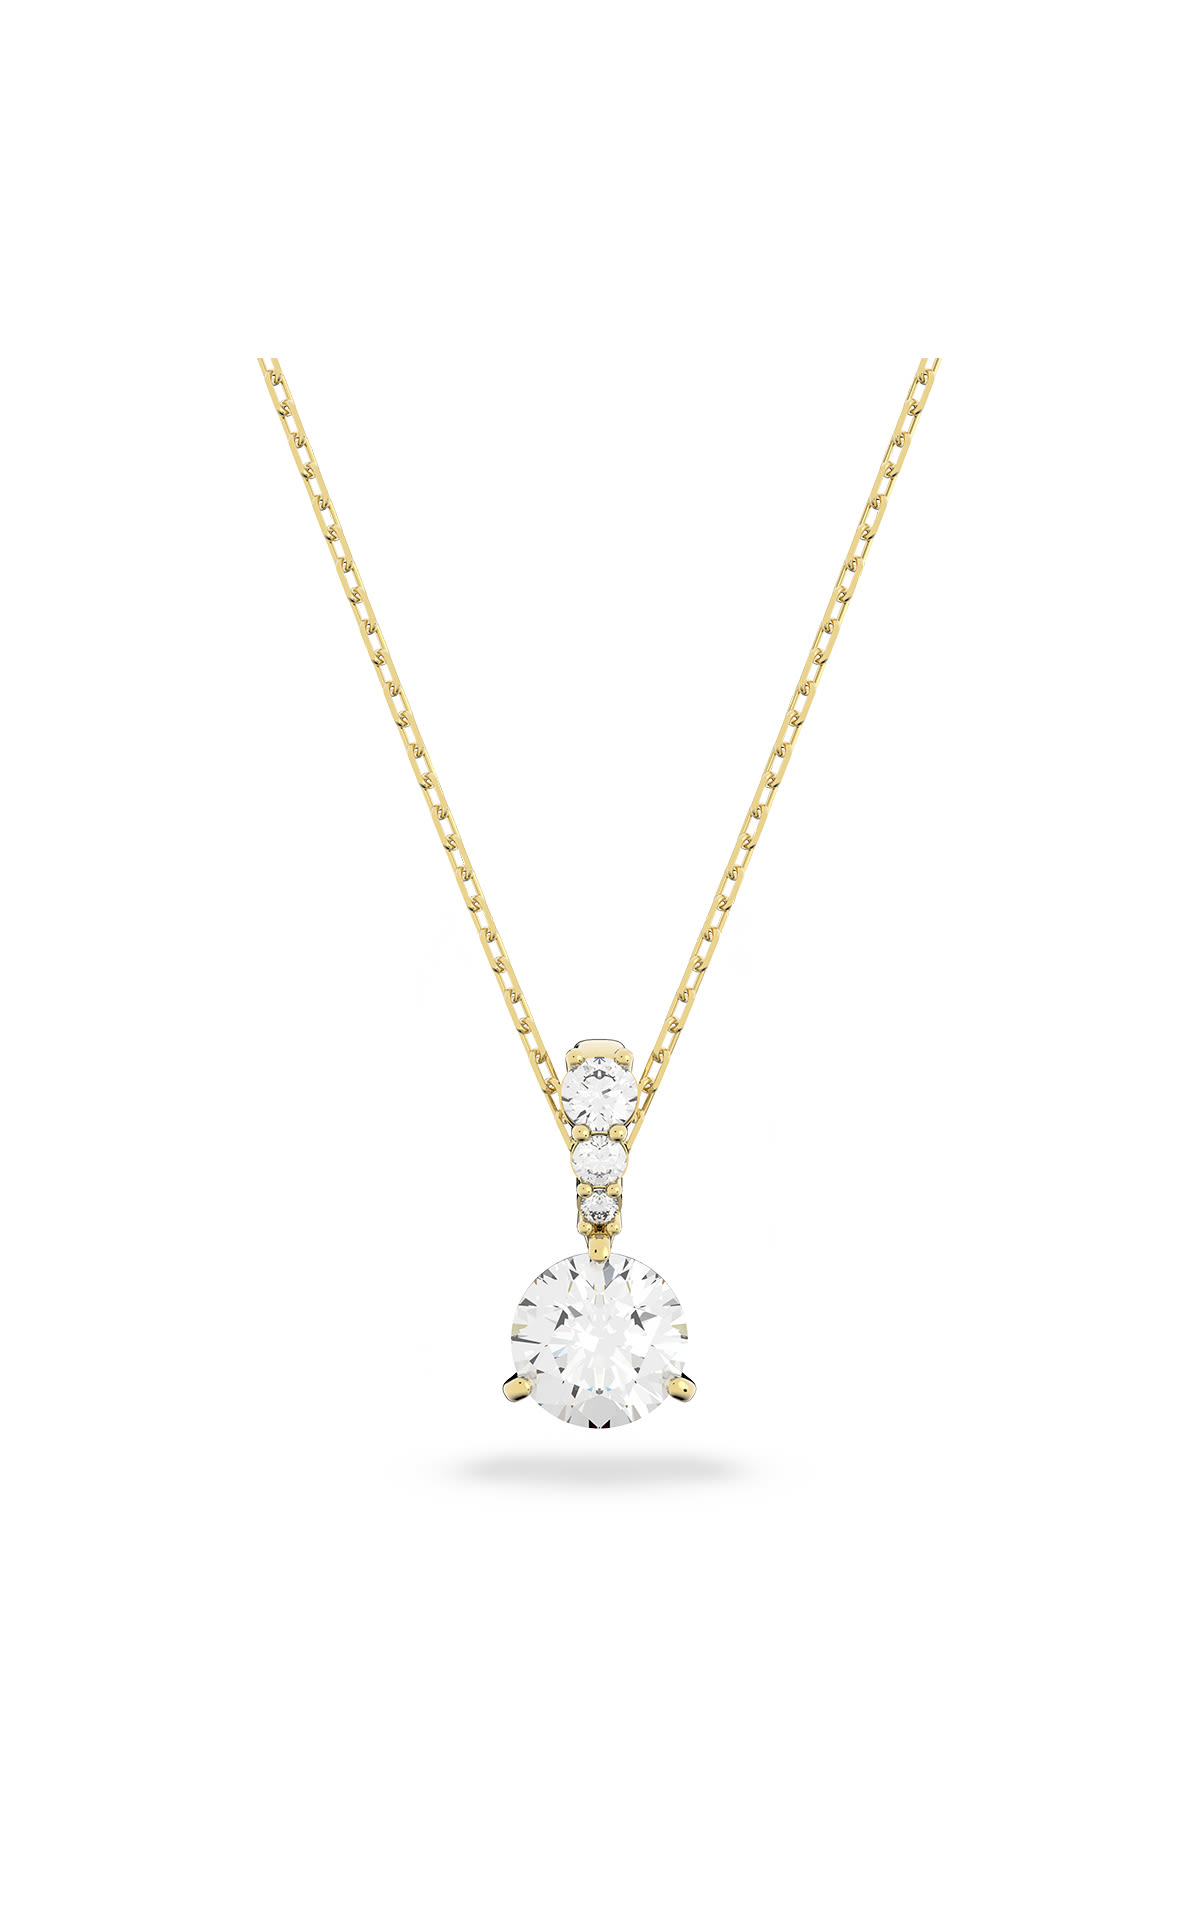 Gold necklace with diamond pendant Swarovski